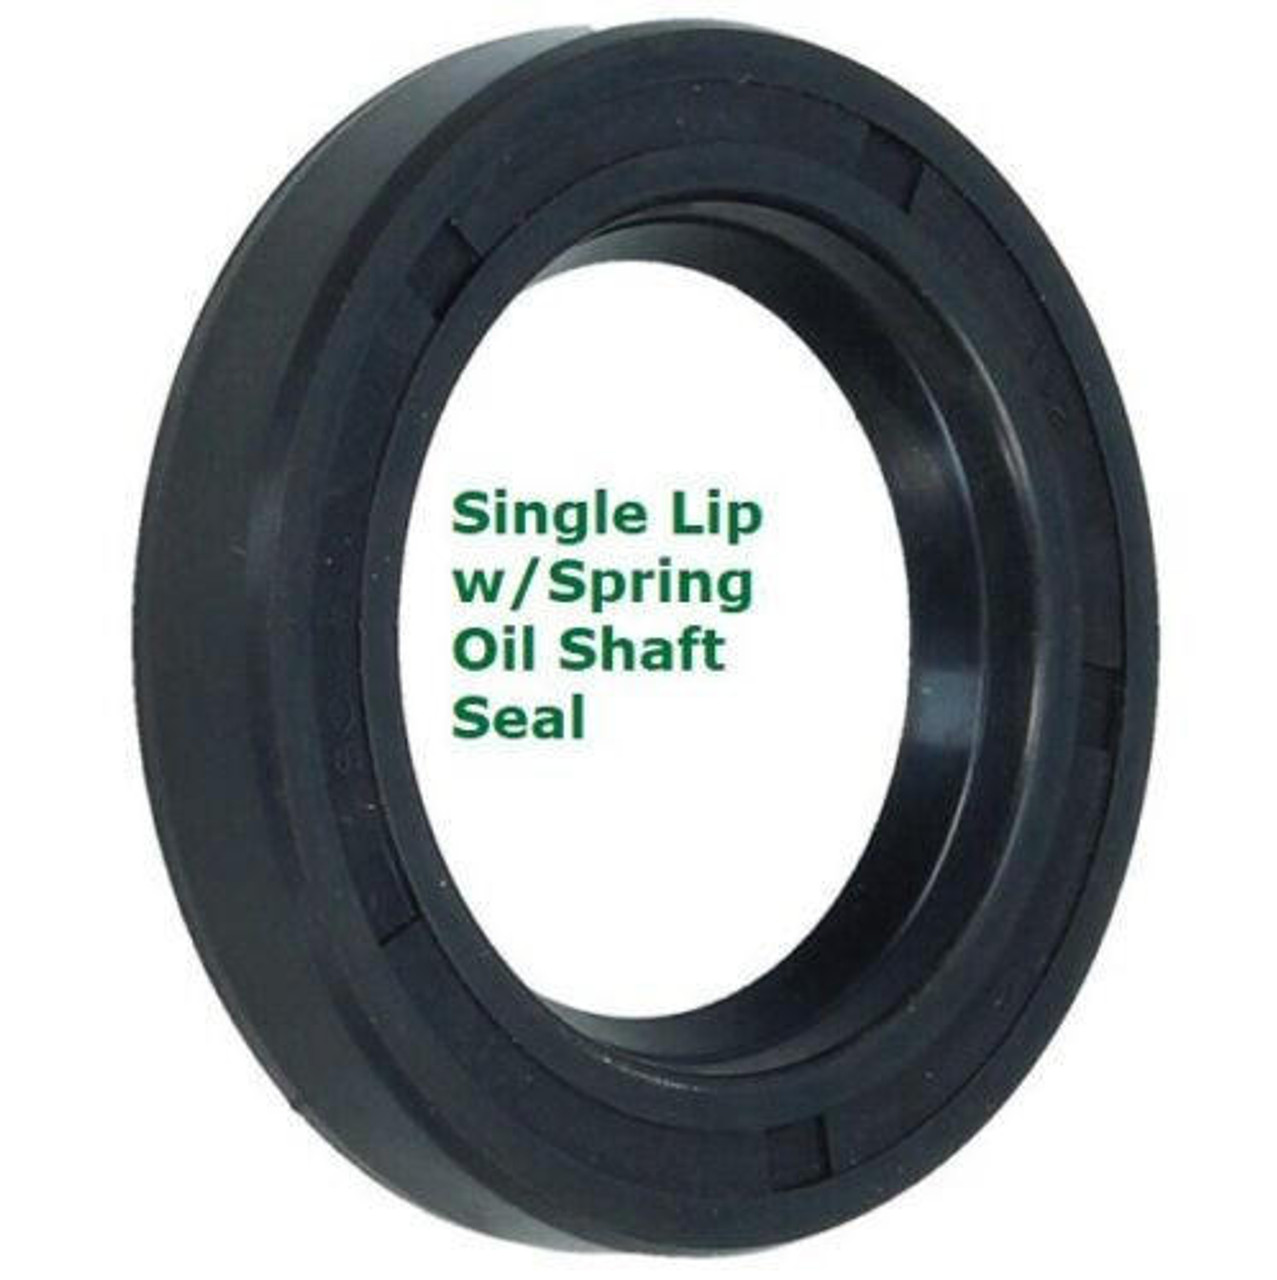 Metric Oil Shaft Seal 150 x 170 x 12mm Single Lip   Price for 1 pc